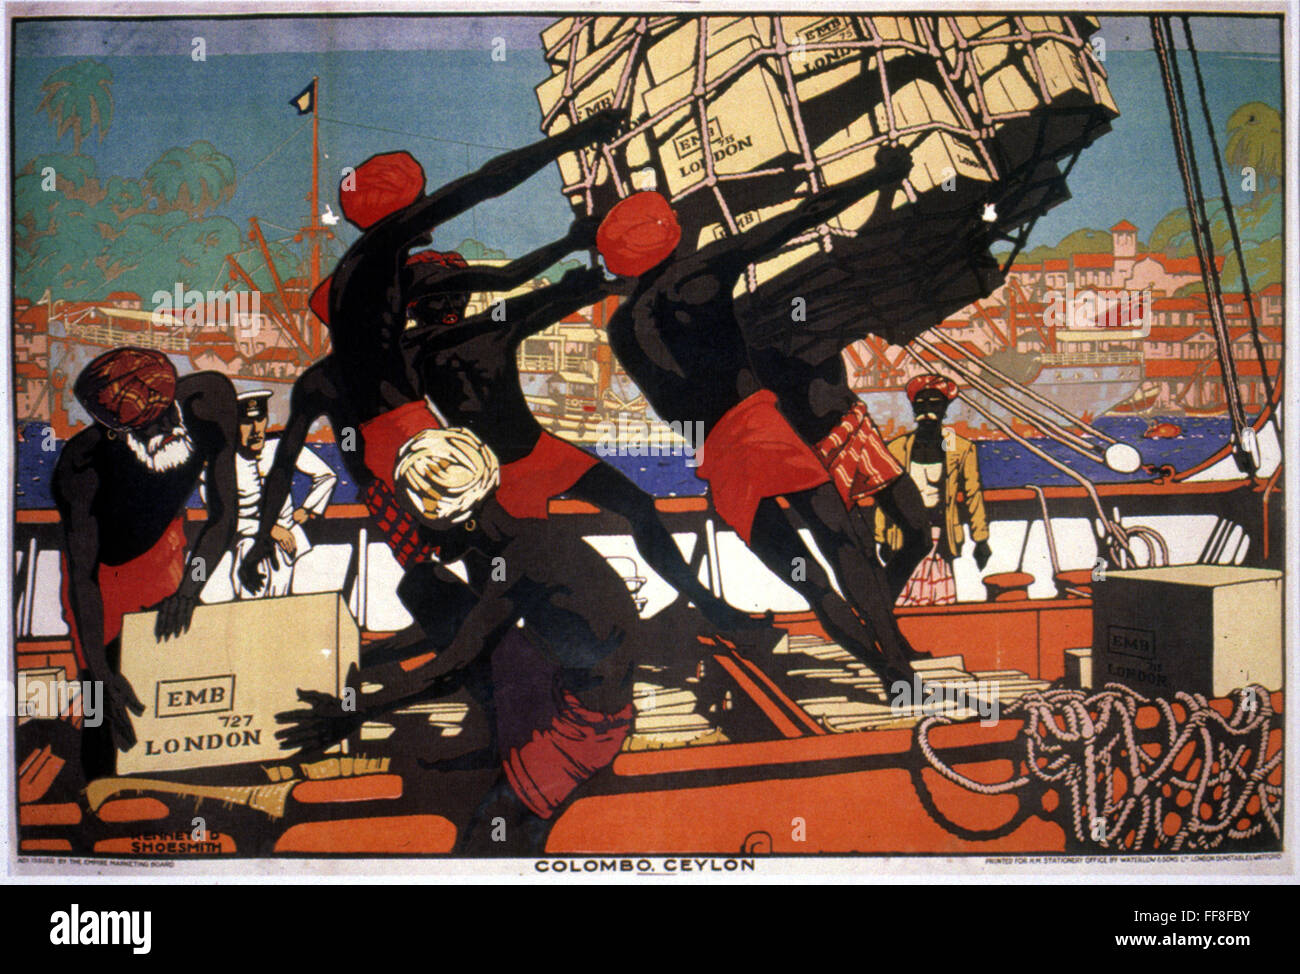 CEYLONESE DOCKWORKERS. /nDockworkers unloading cargo at Colombo, Ceylon. British Empire Marketing Board poster, 1928. Stock Photo